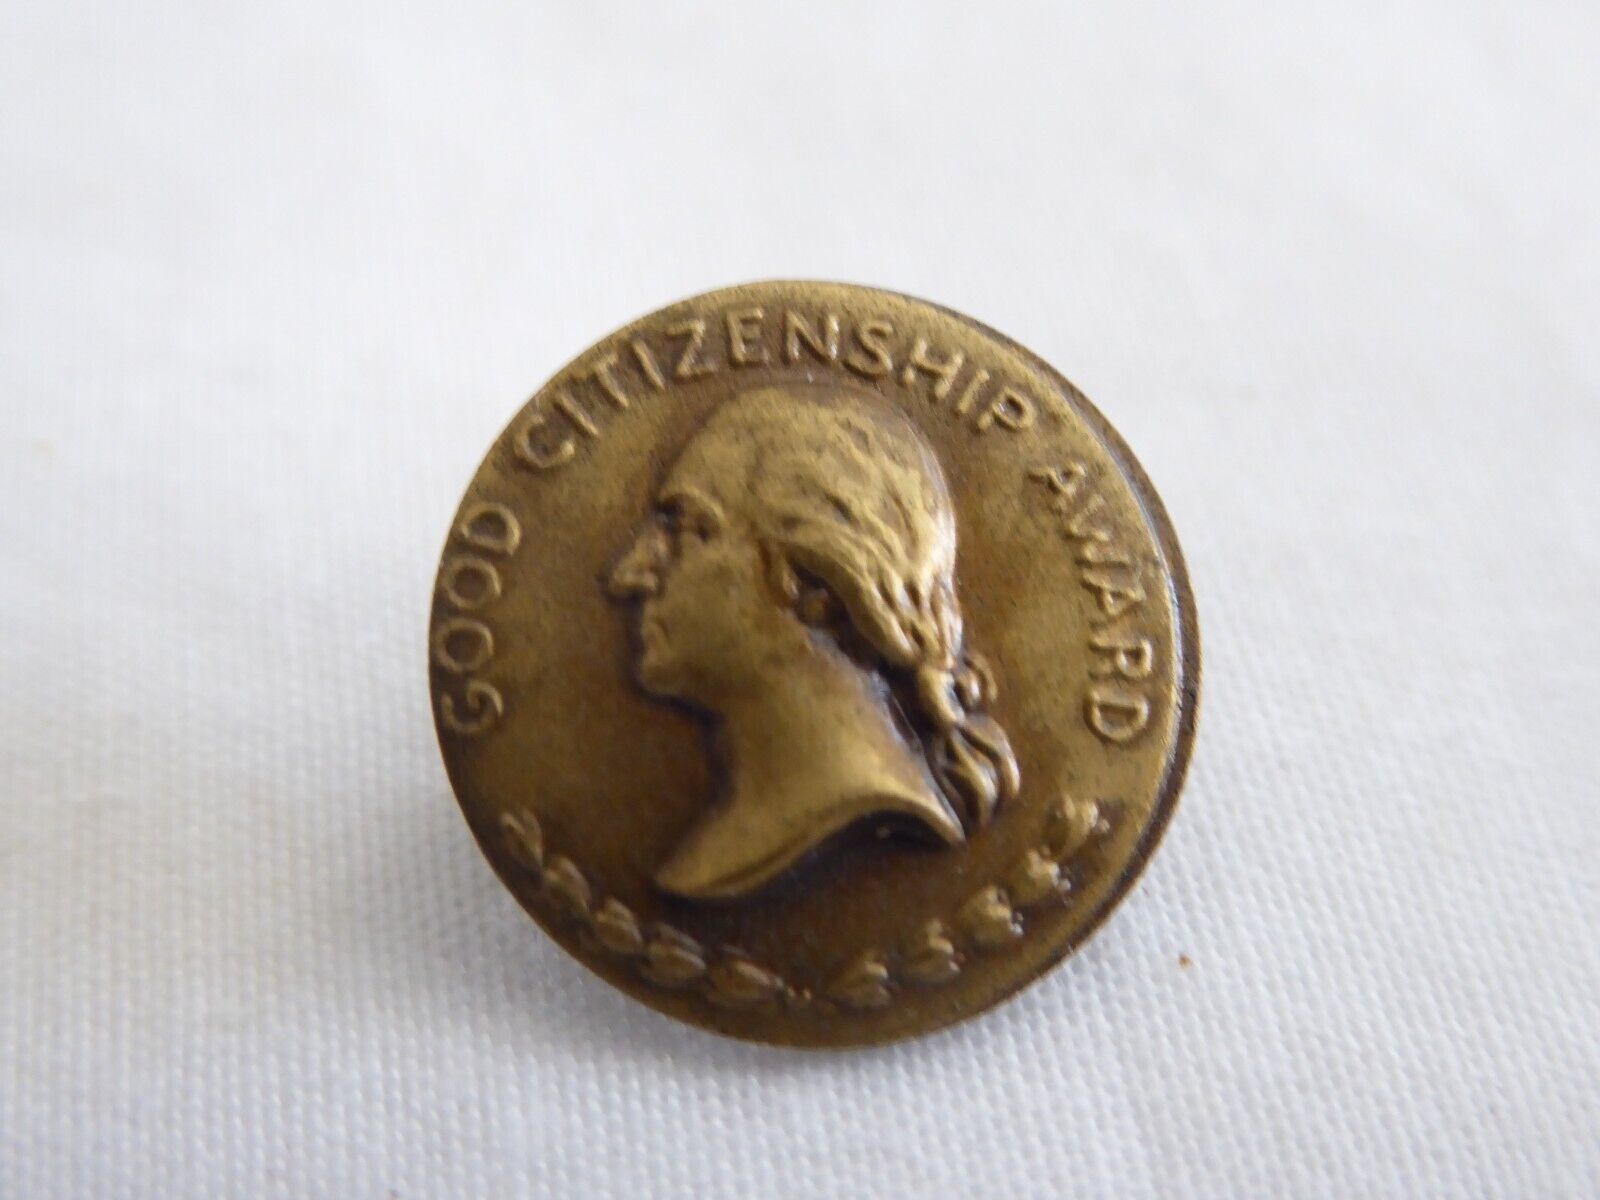 Vintage Good Citizenship Award Goldtone Pin With Geo. Washington